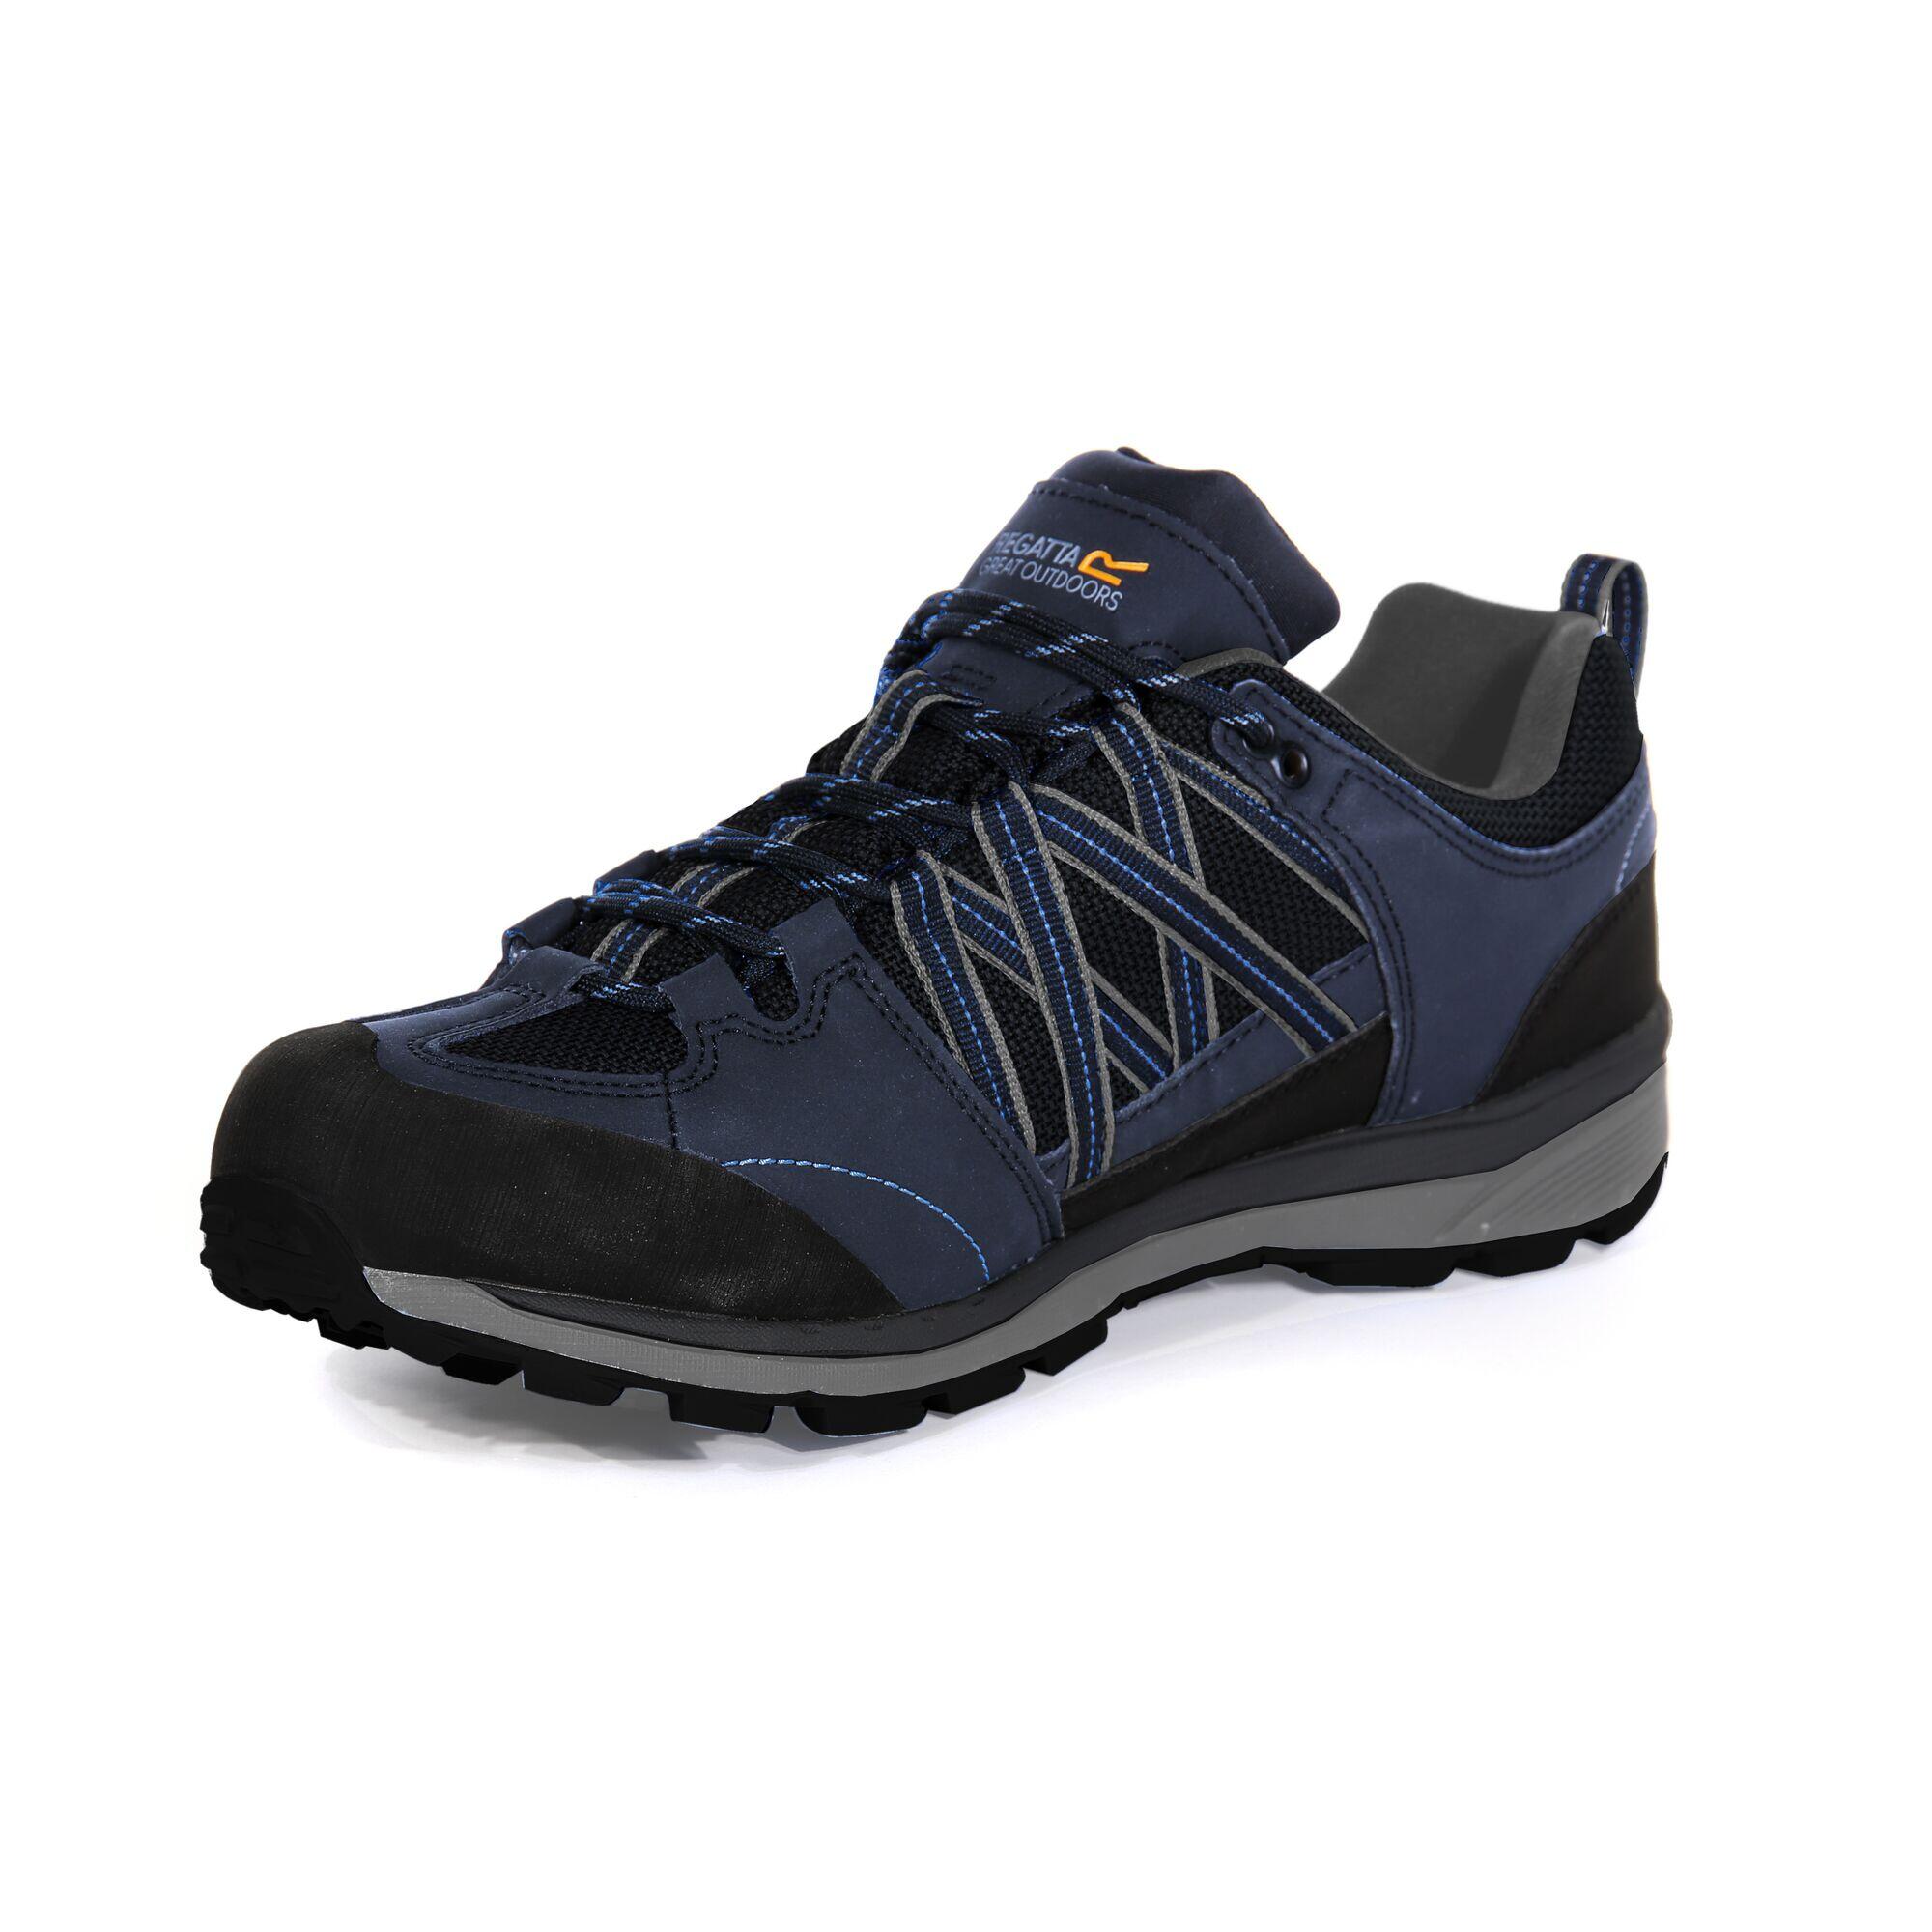 Samaris II Men's Hiking Shoes - Navy/Blue 4/6